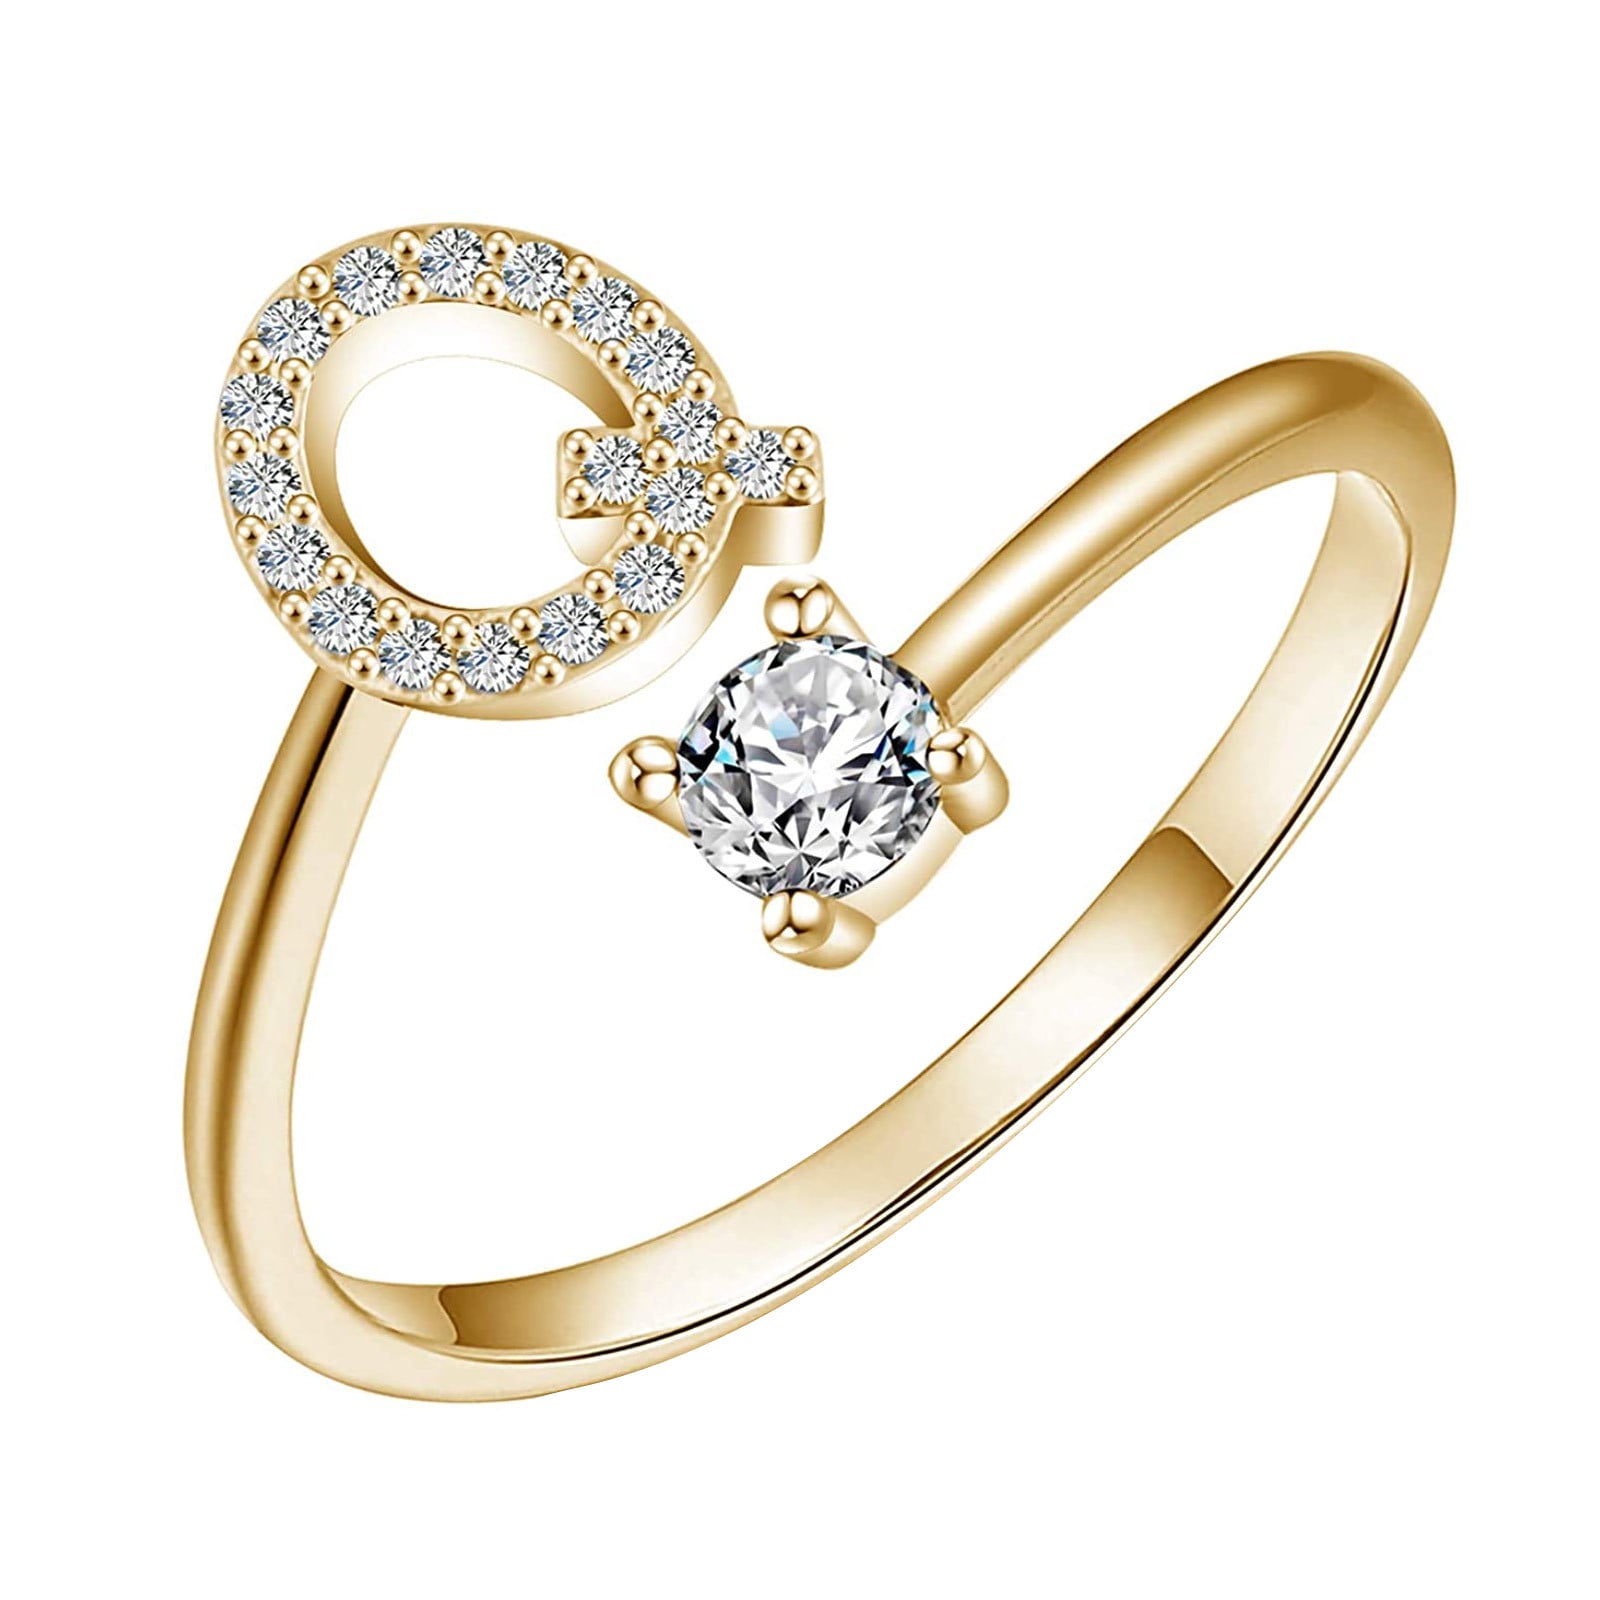 Round 14k Rose Gold Ladies Fancy Diamond Ring, Weight: 2.220, Size: 12 Ind